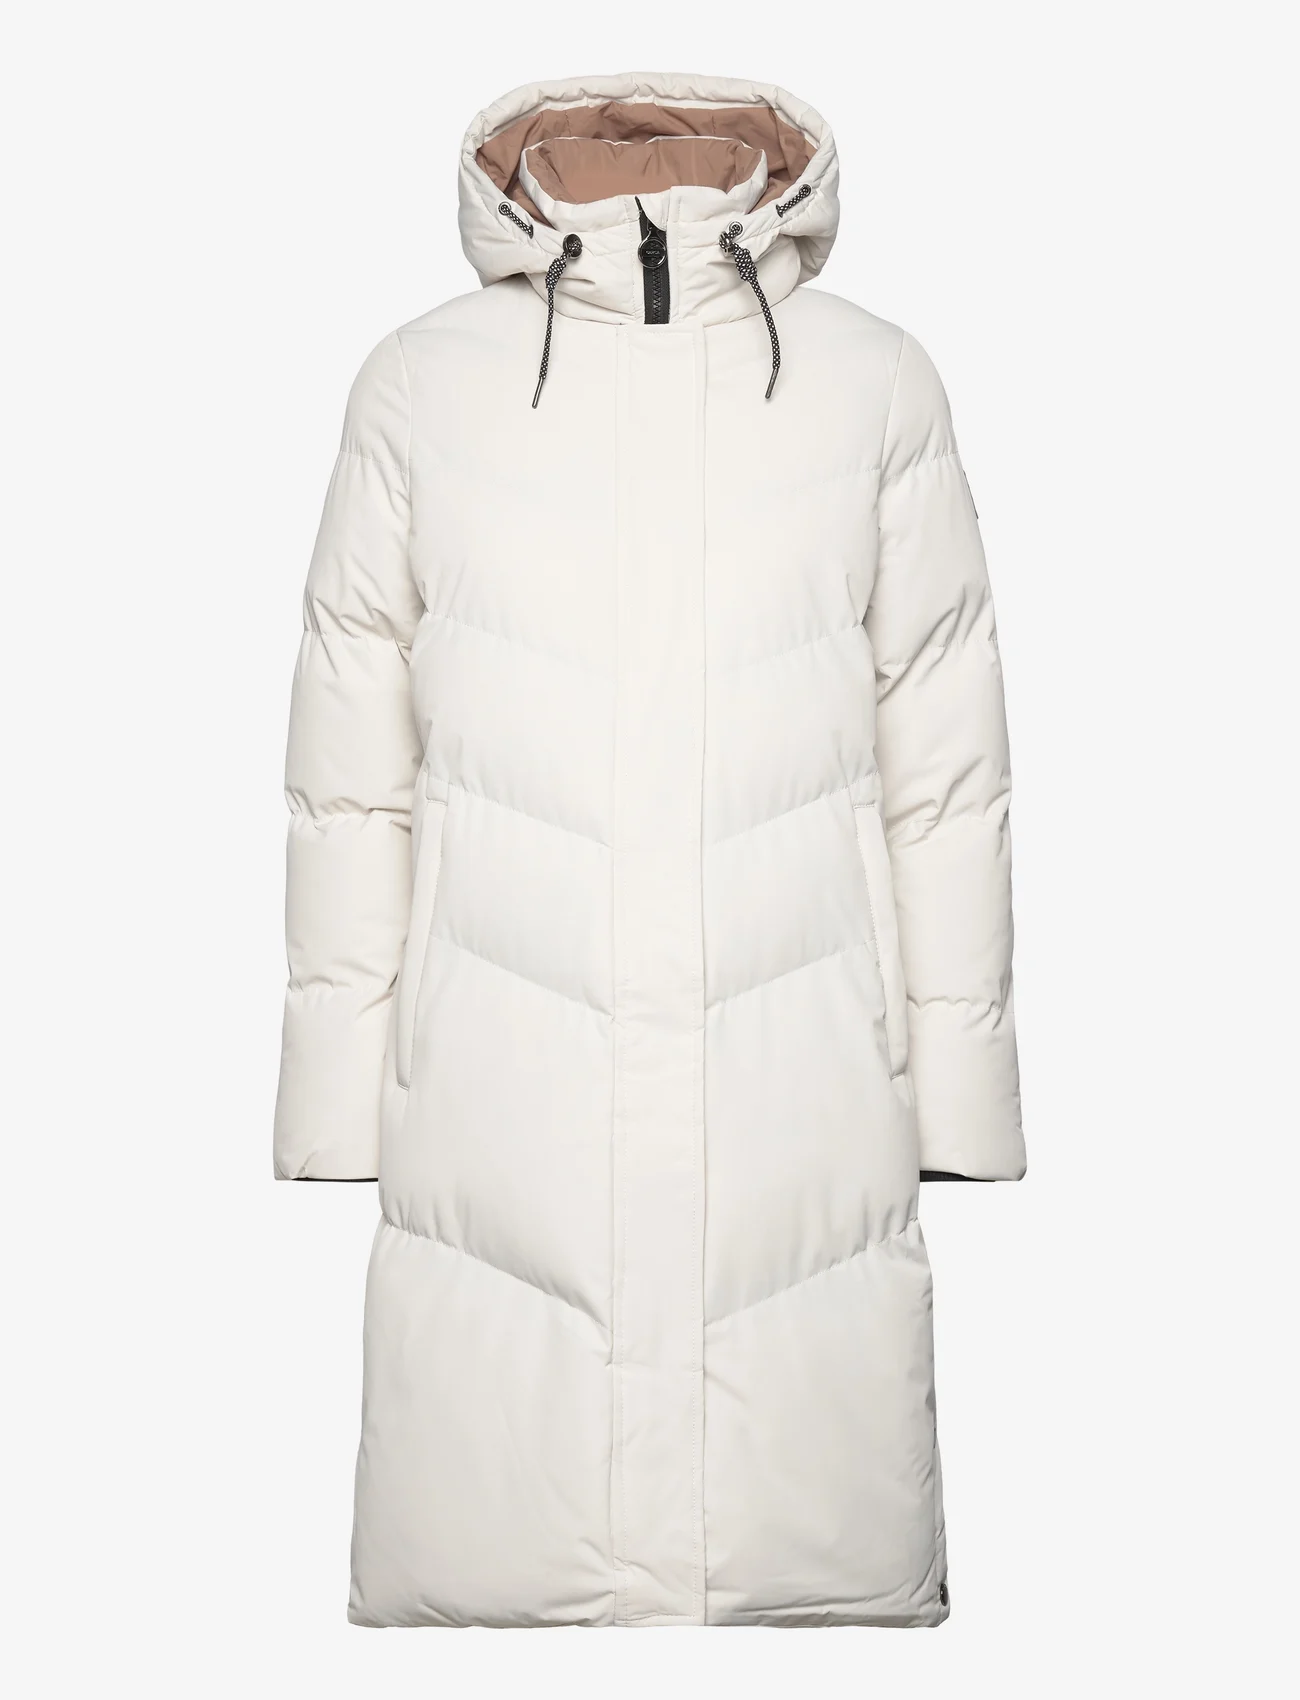 Garcia - ladies outdoor jackets - winter jackets - cream - 0